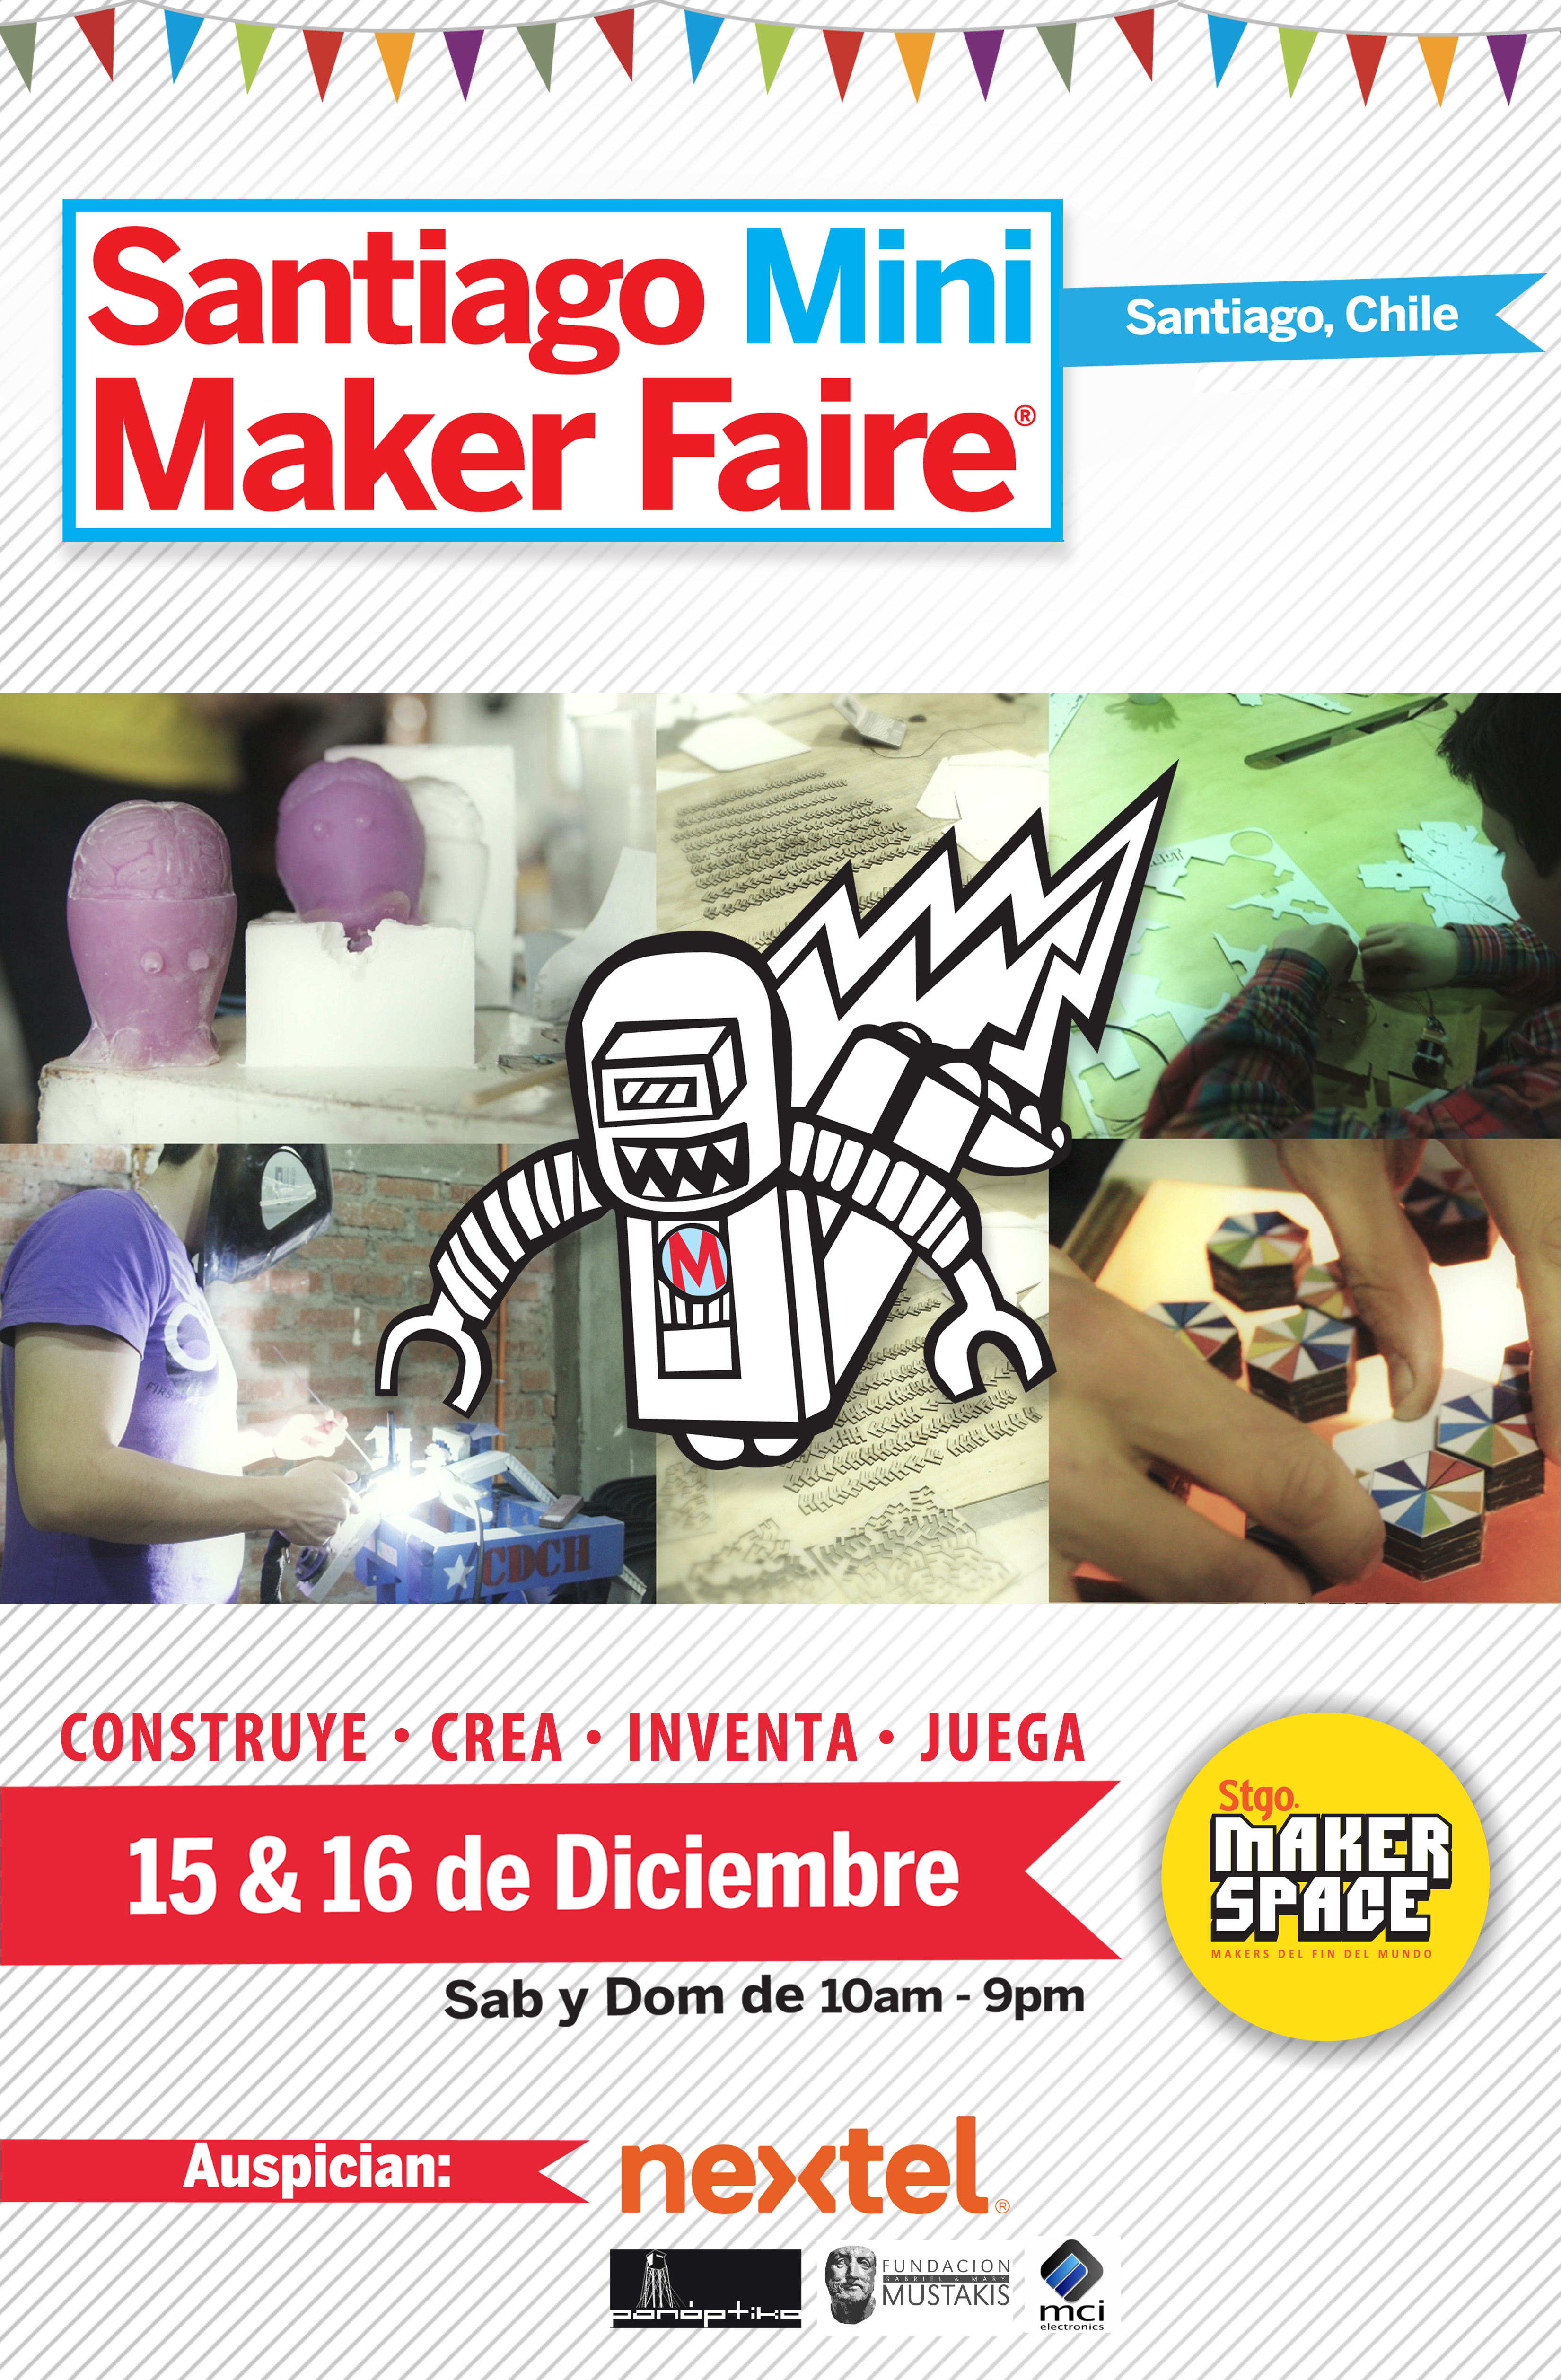 Santiago Mini Maker Faire